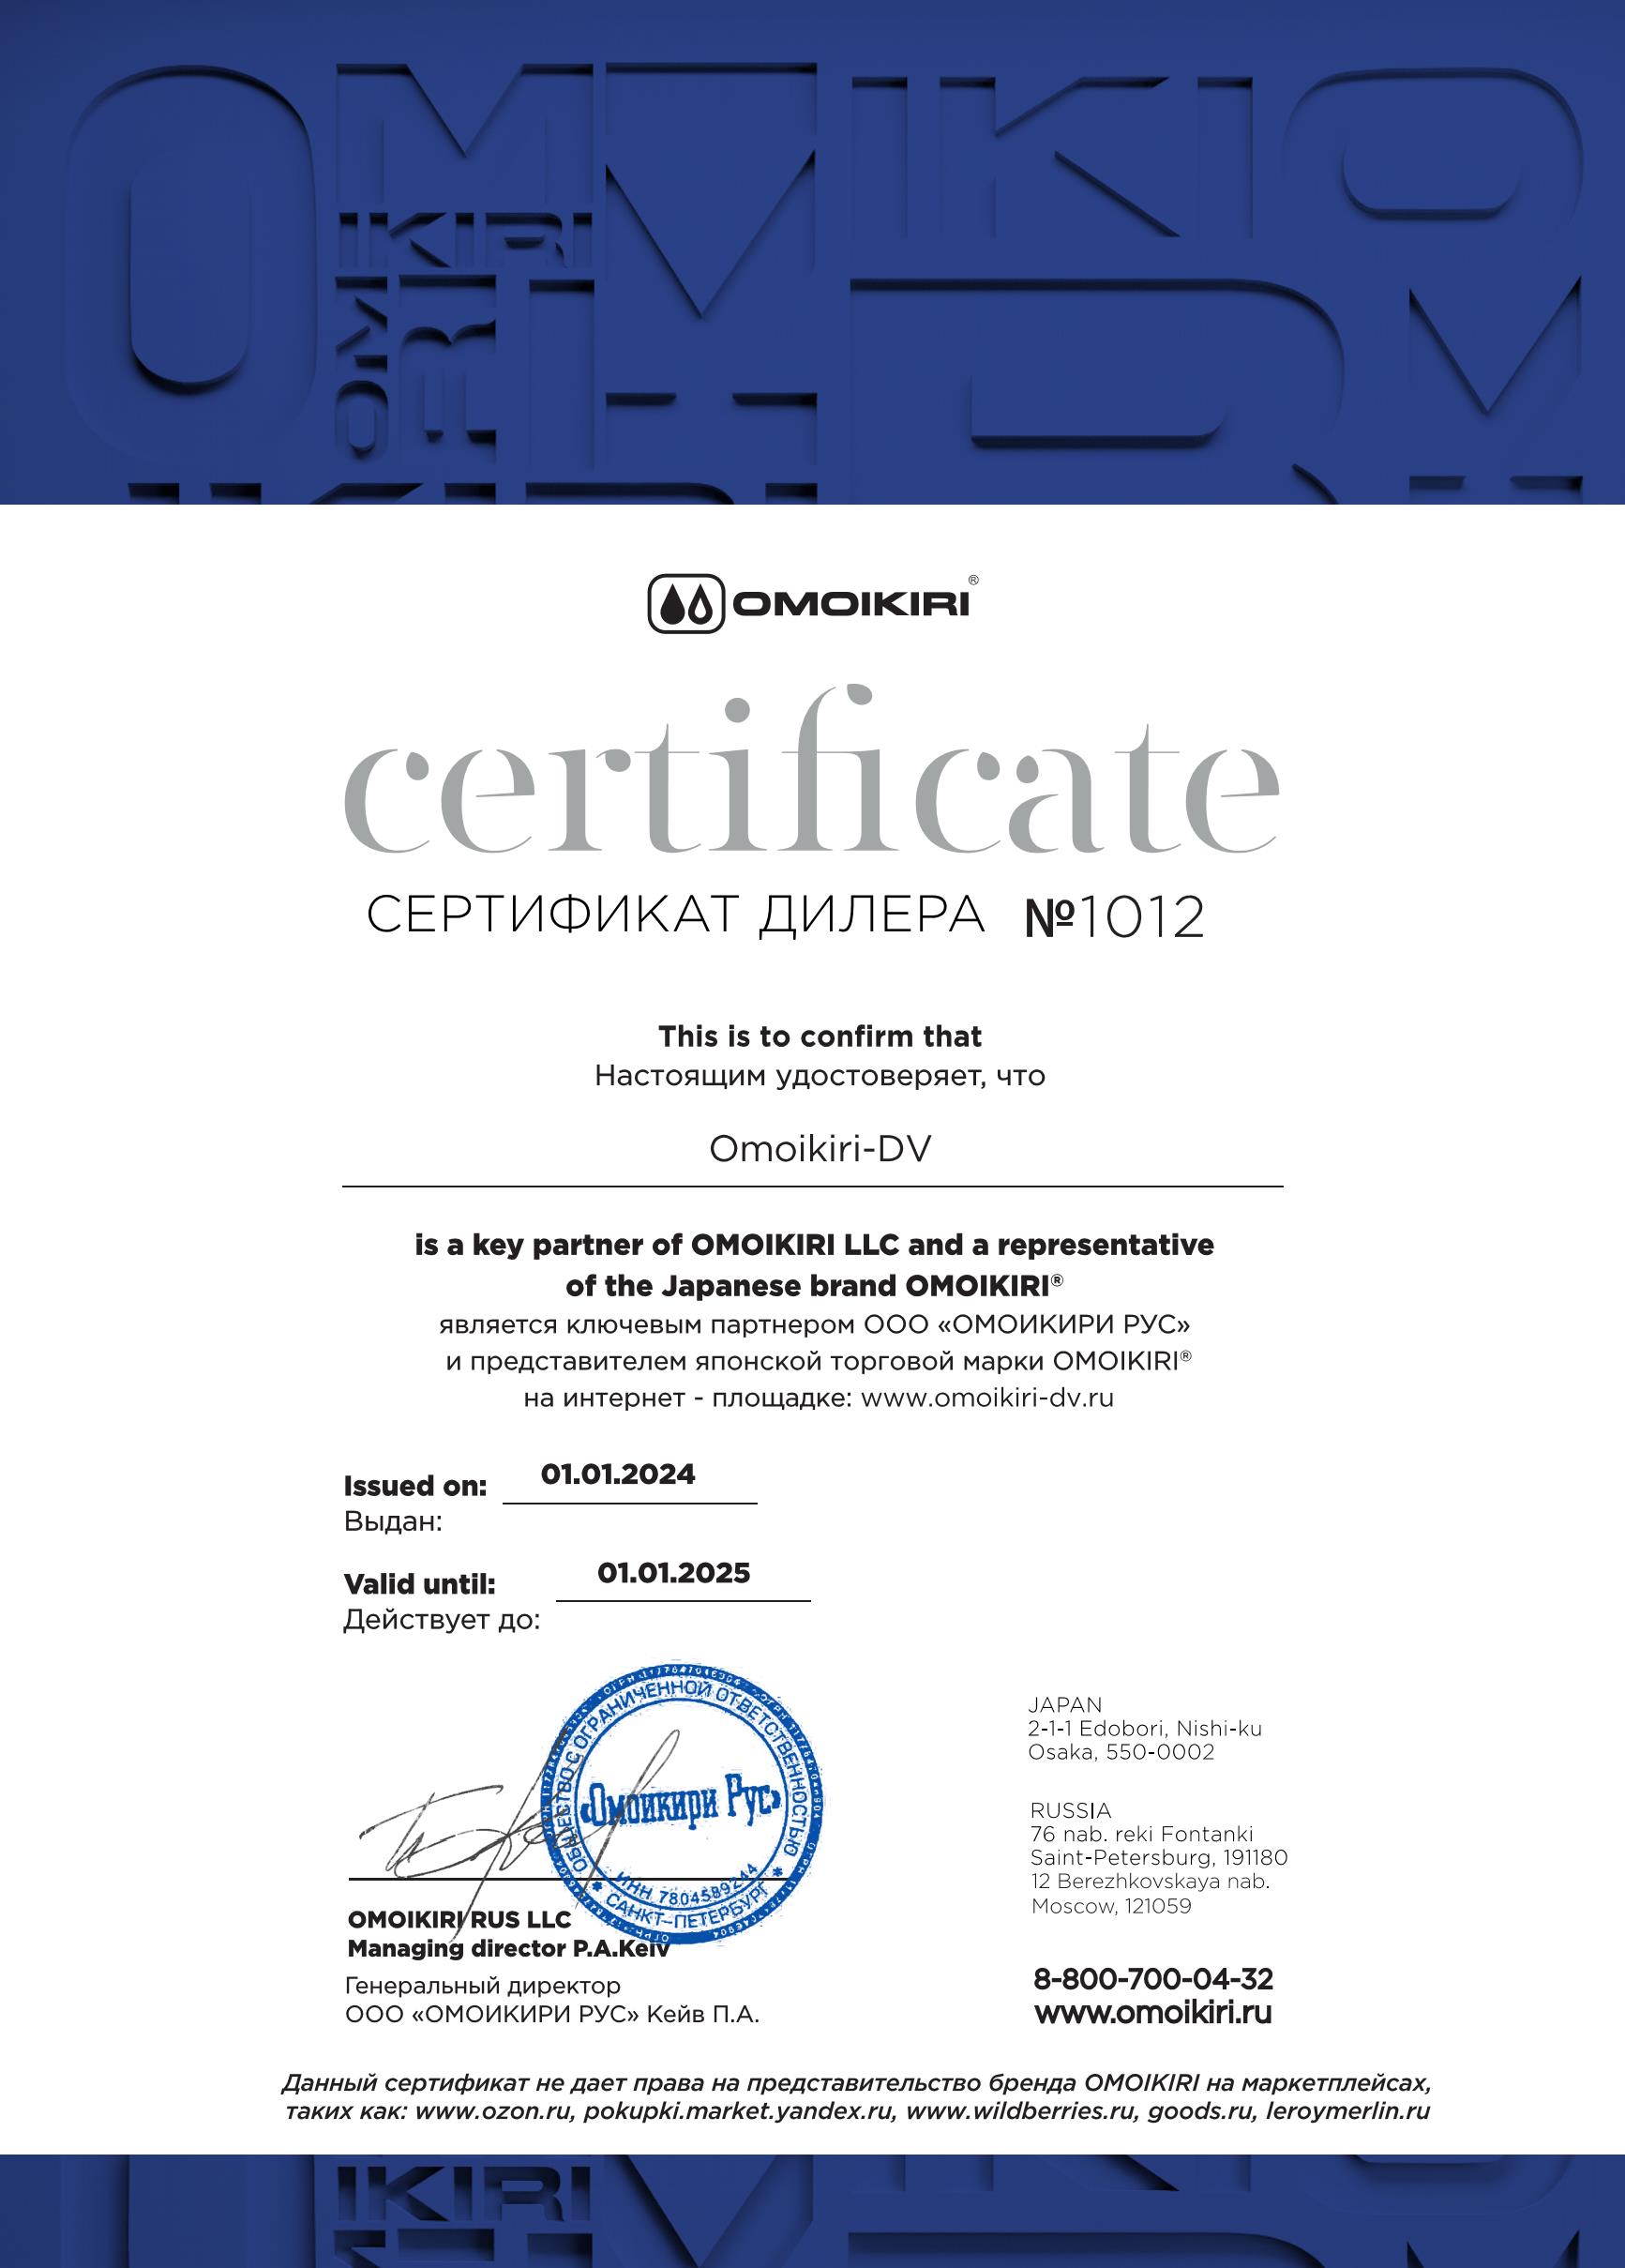 Сертификат дилера OMOIKIRI №1154